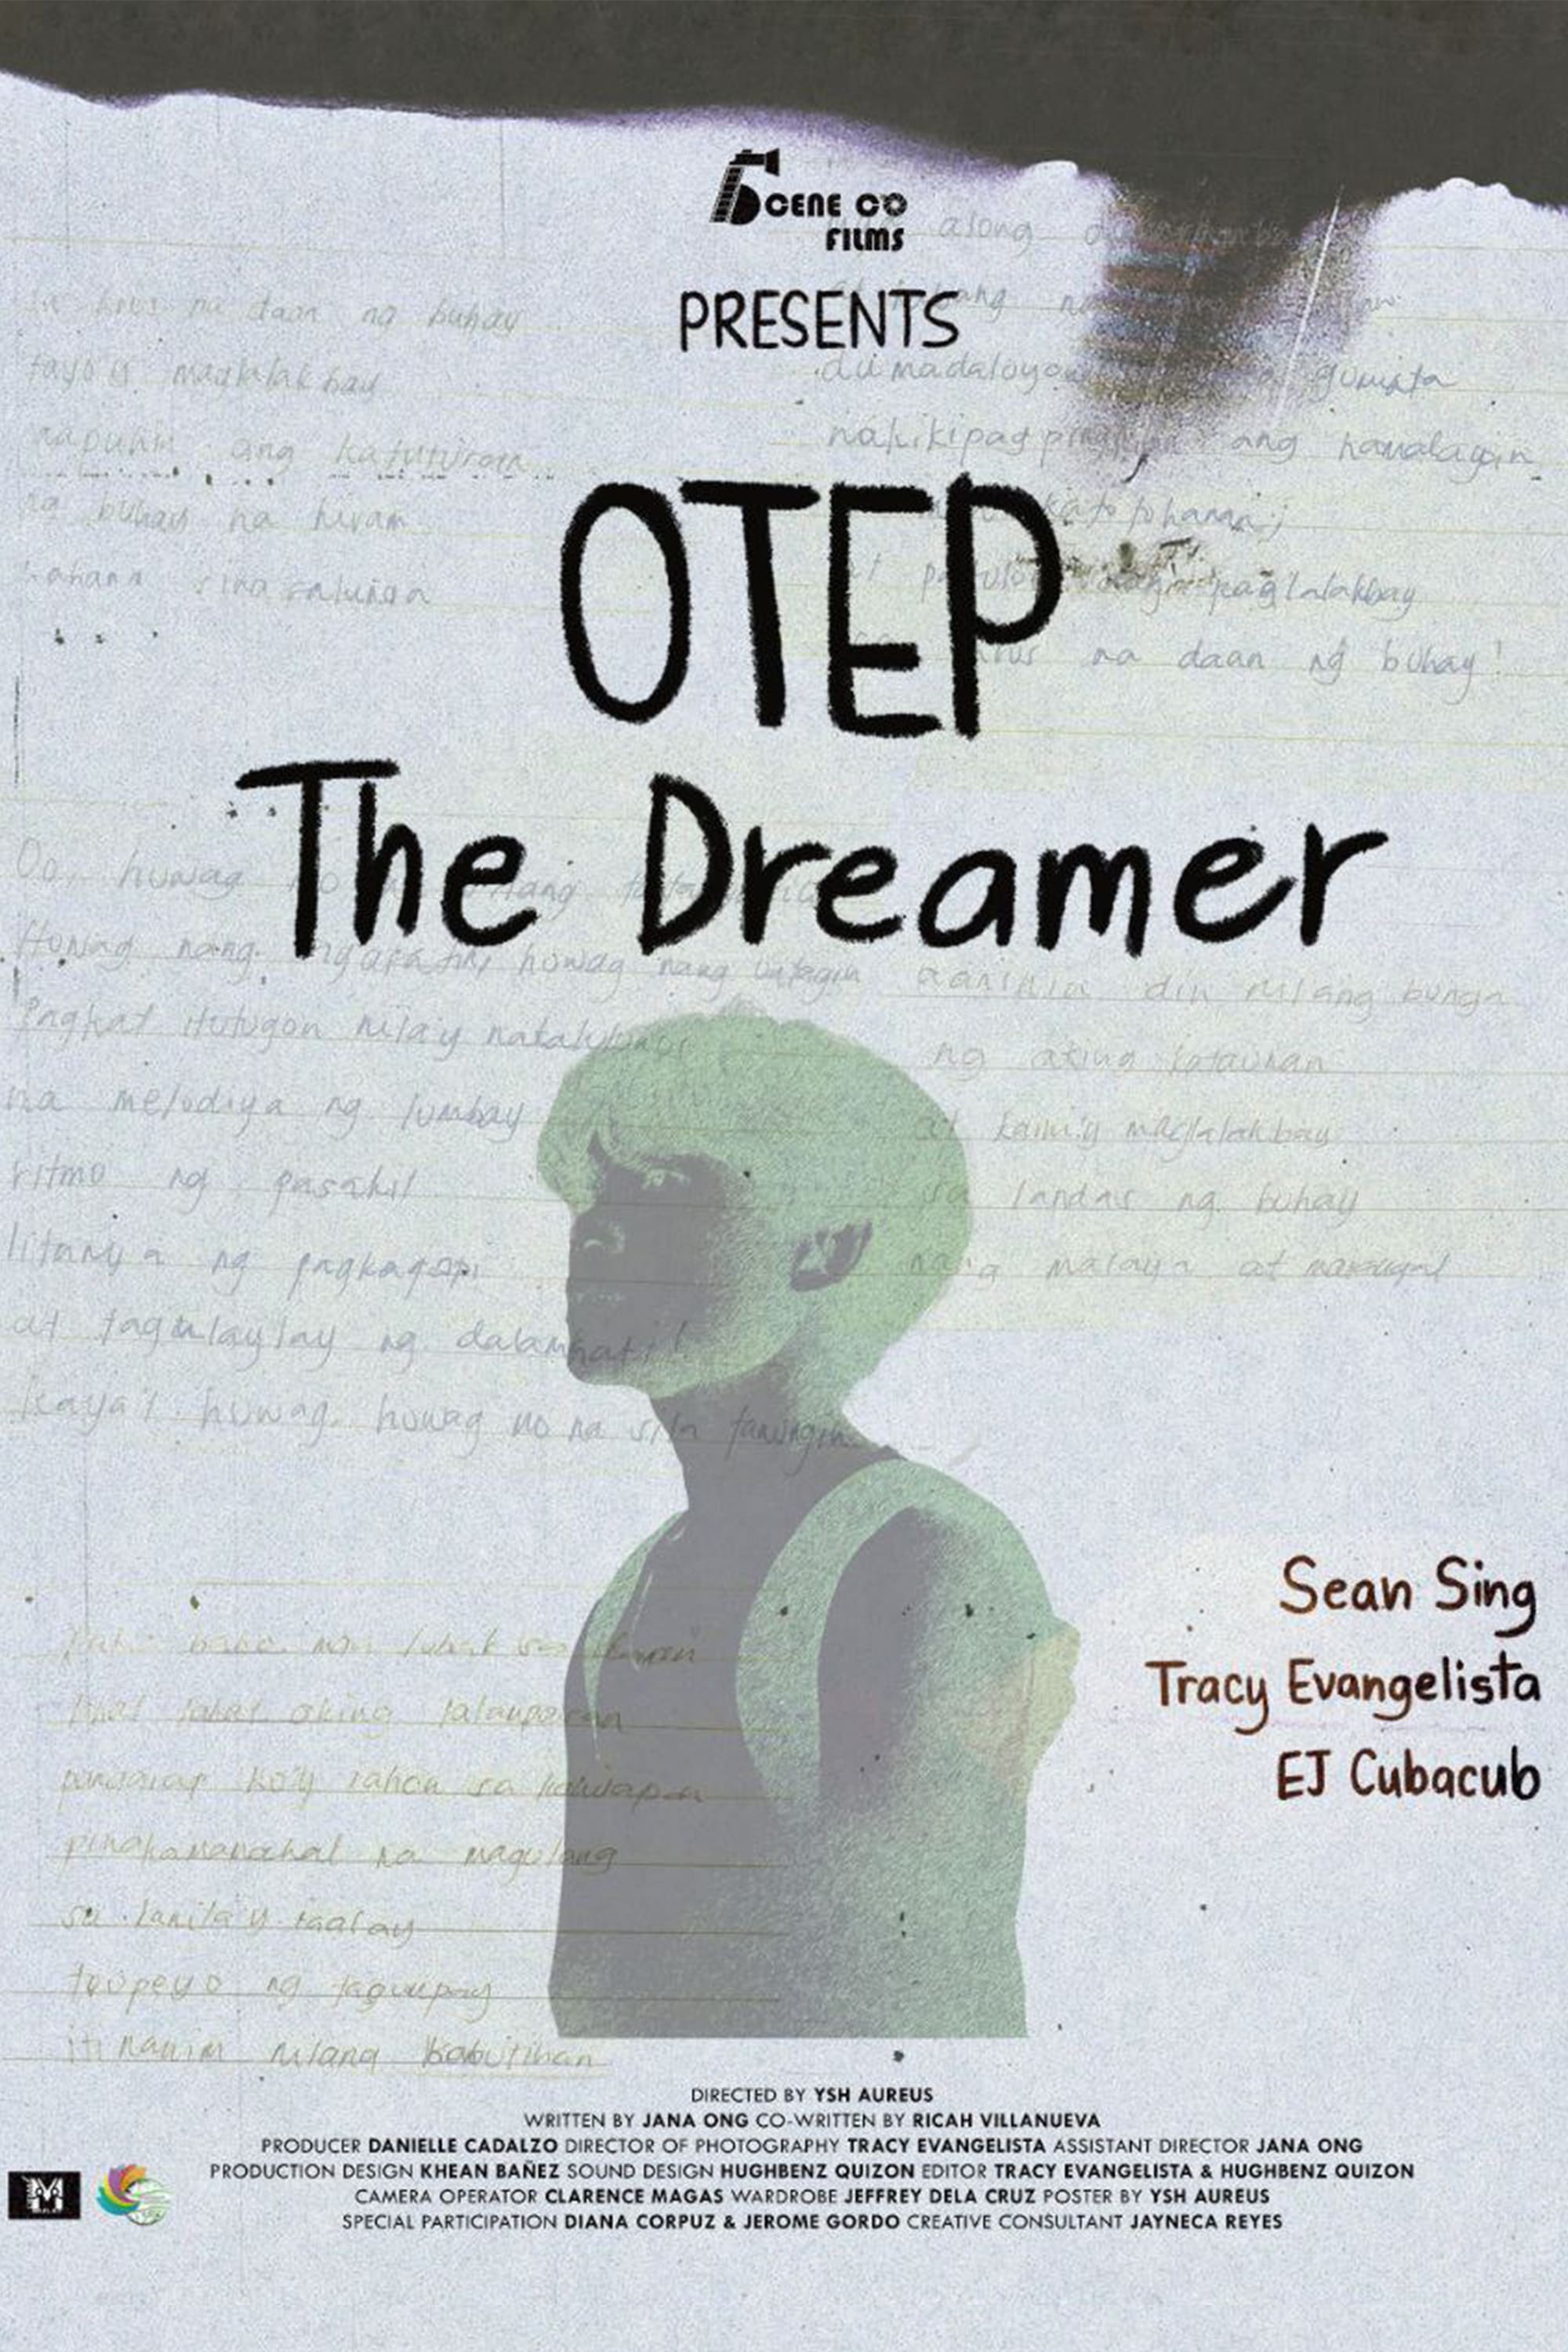 OTEP The Dreamer